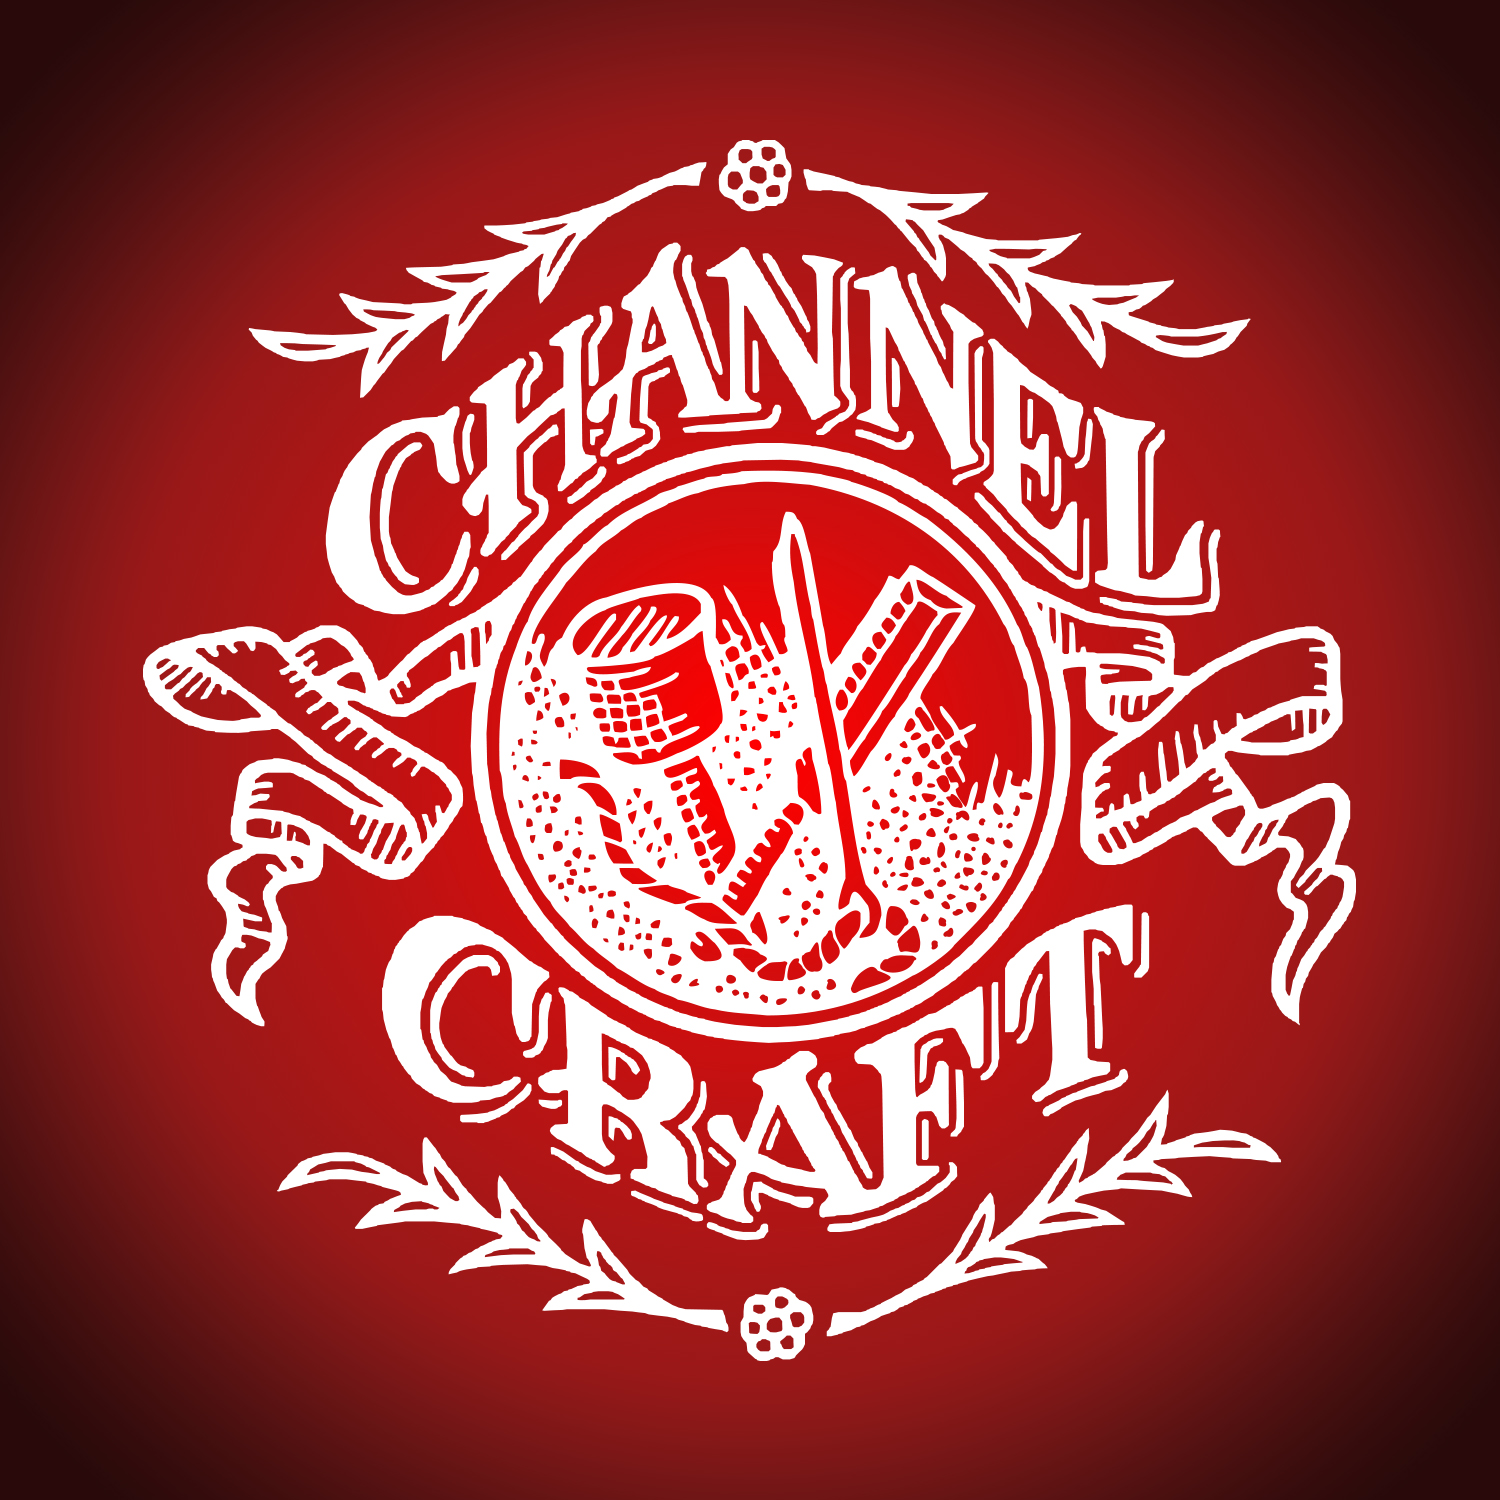 Channel Craft logo